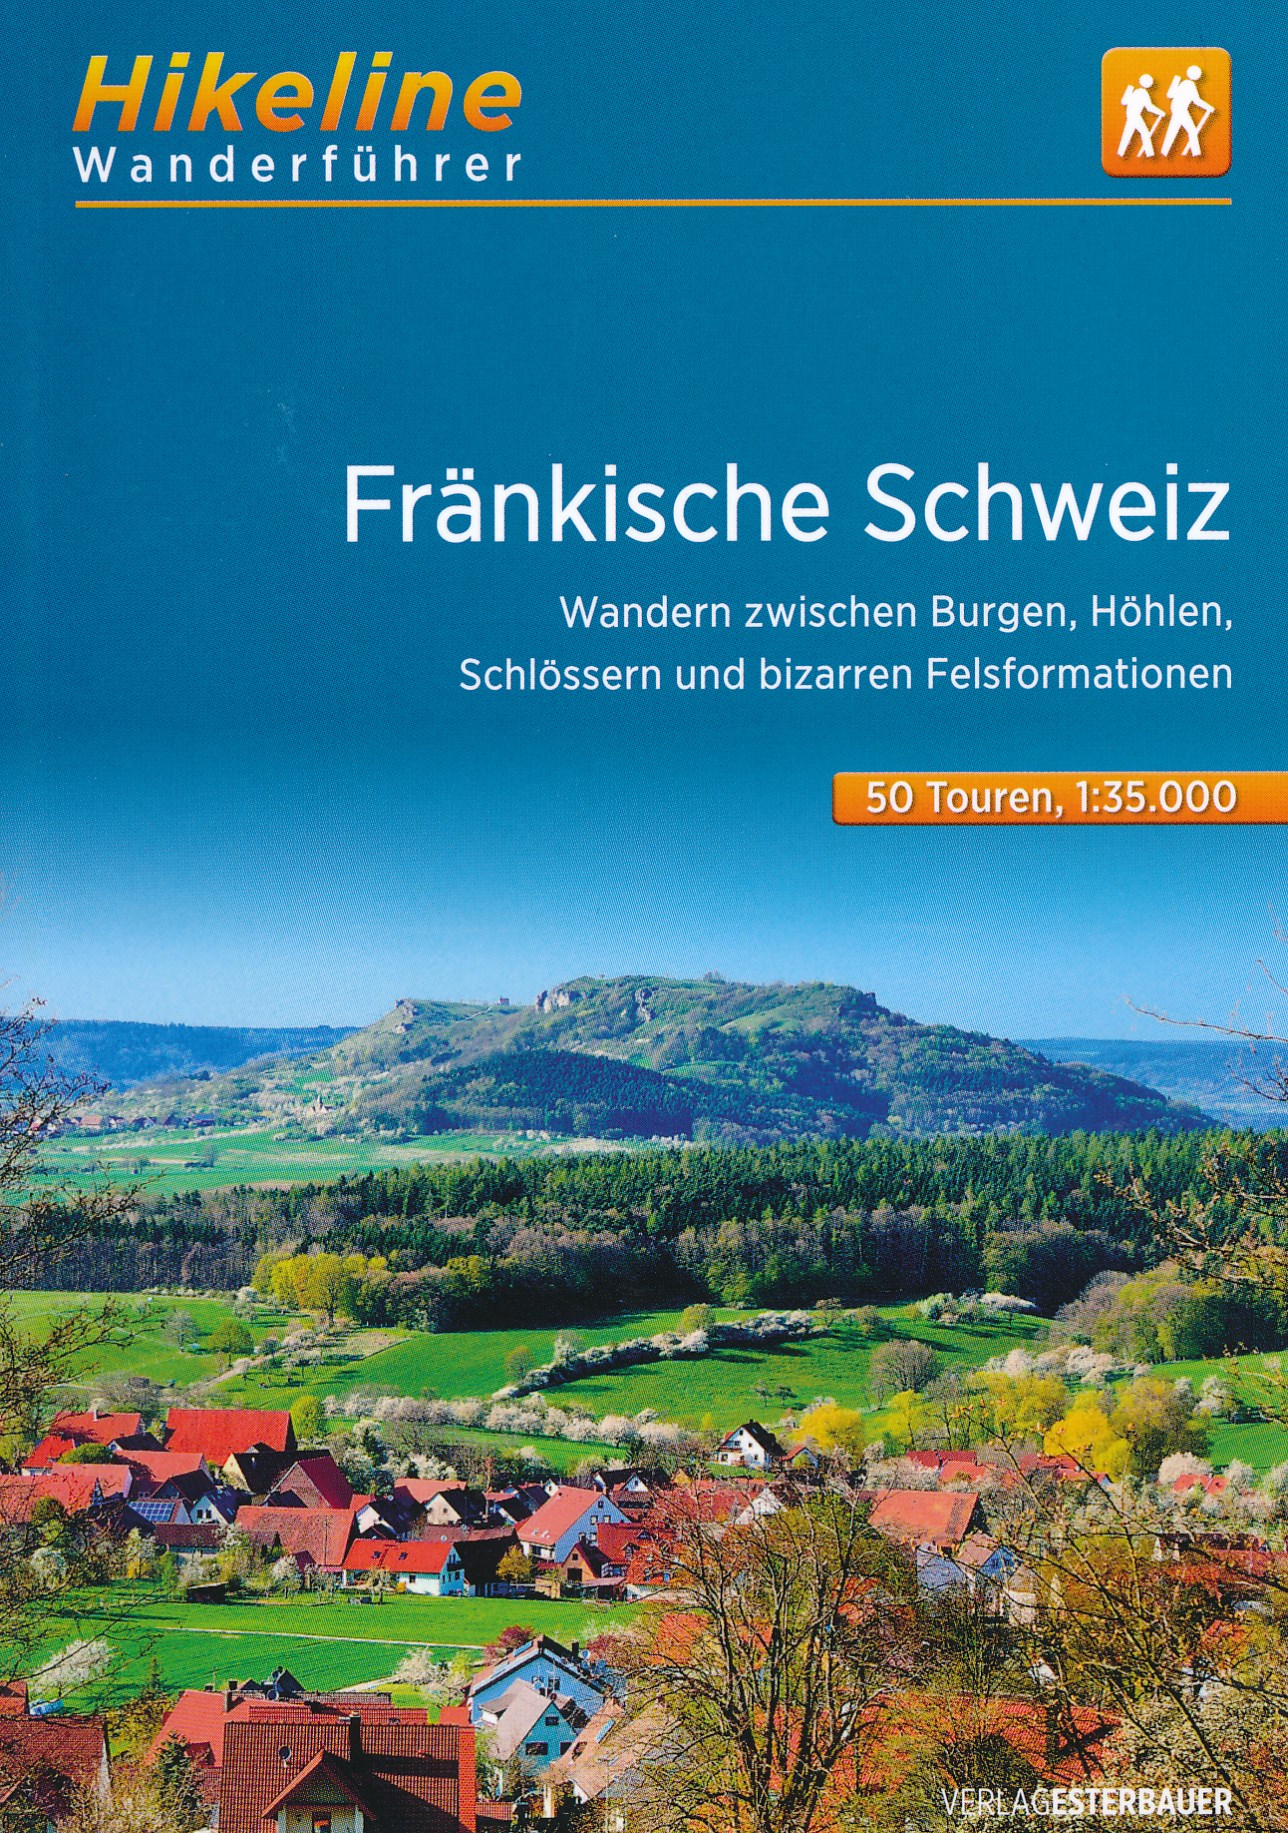 Online bestellen: Wandelgids Hikeline Fränkische Schweiz | Esterbauer